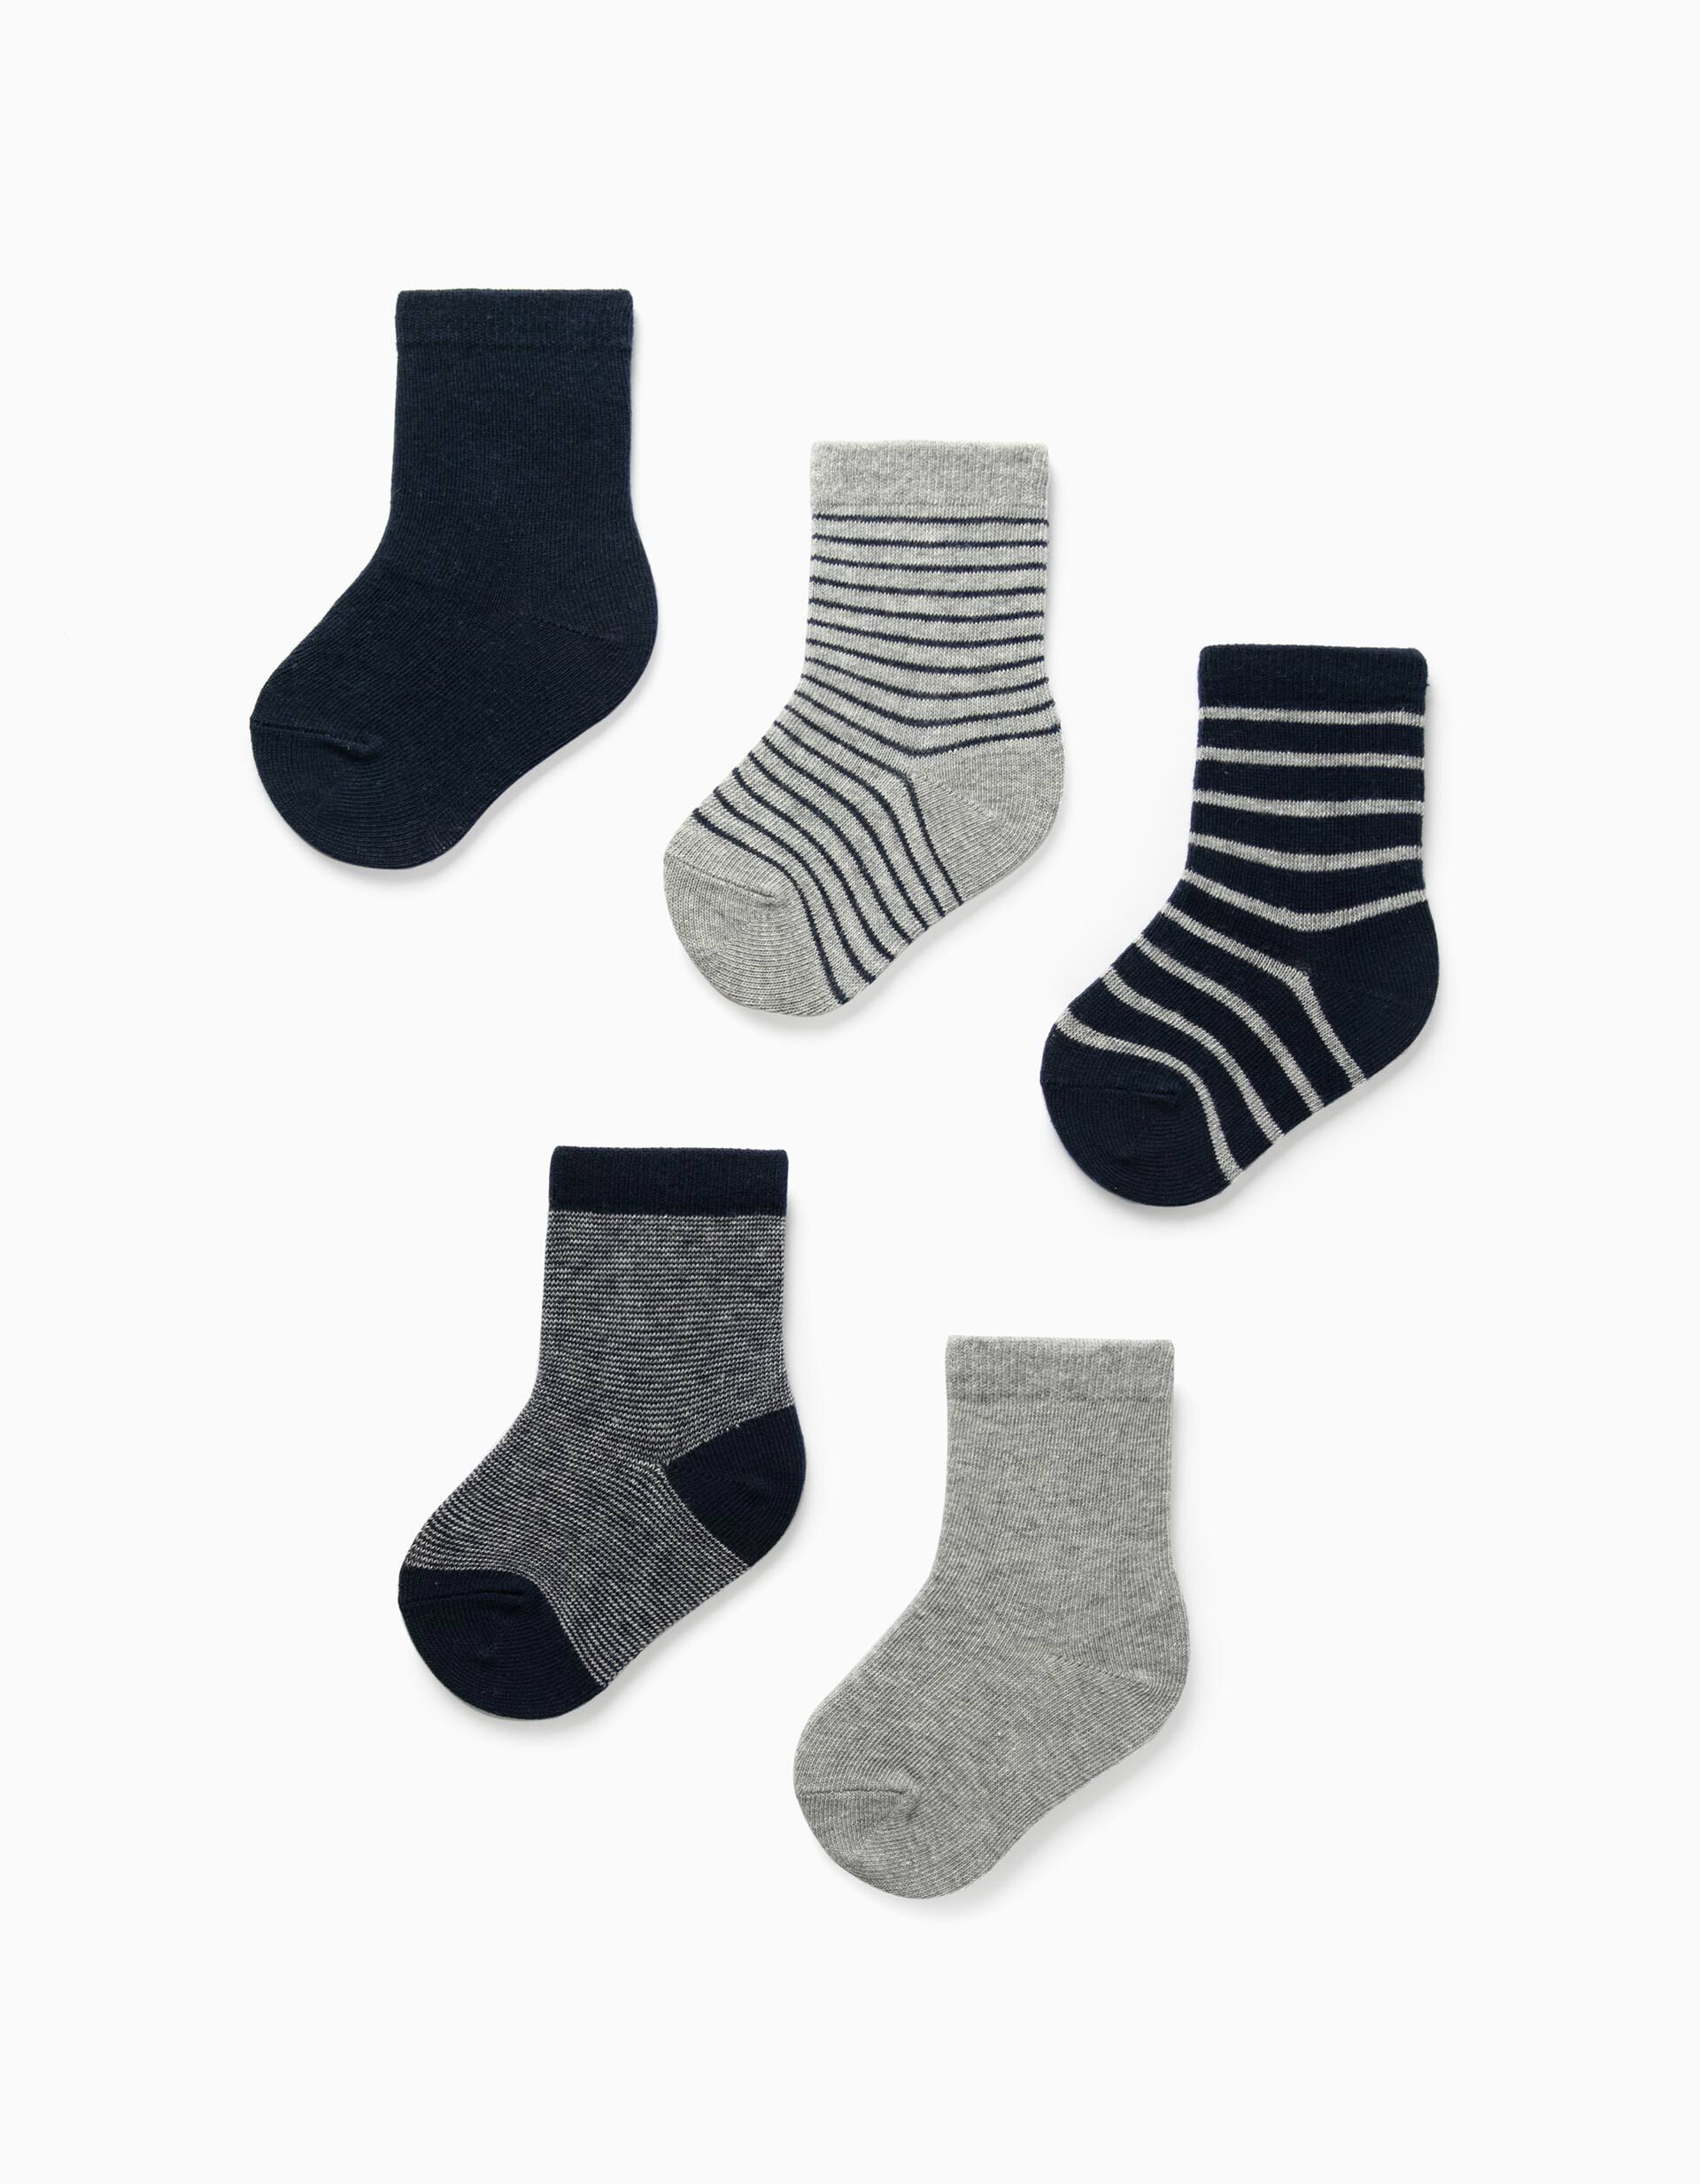 Boys Grey 15 Pairs Ribbed Ankle Socks School Childrens Kids Plain Grey Socks